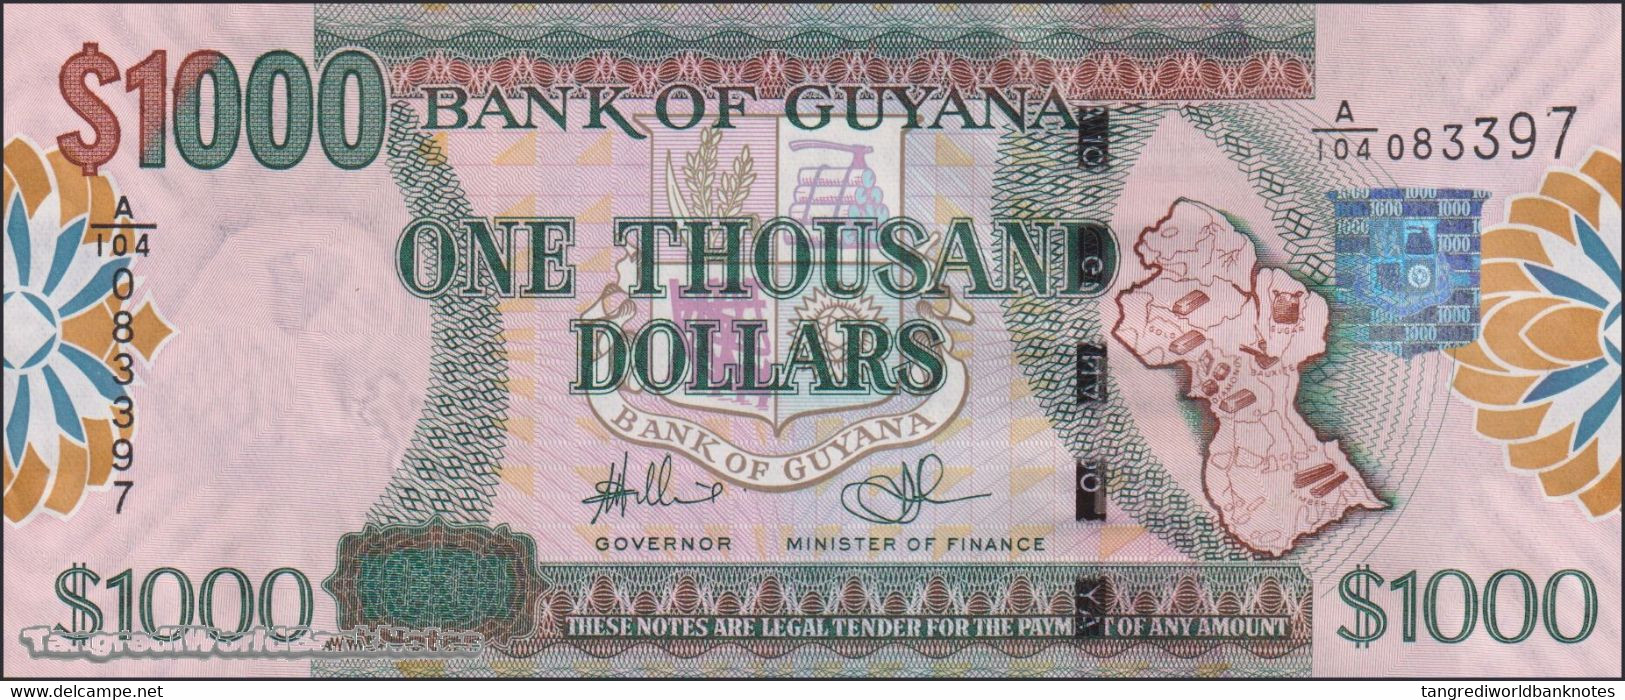 TWN - GUYANA 39b - 1000 1.000 Dollars 2009 Prefix A/104 - Signatures: Williams & A. Singh - Printer: DLR UNC - Guyana